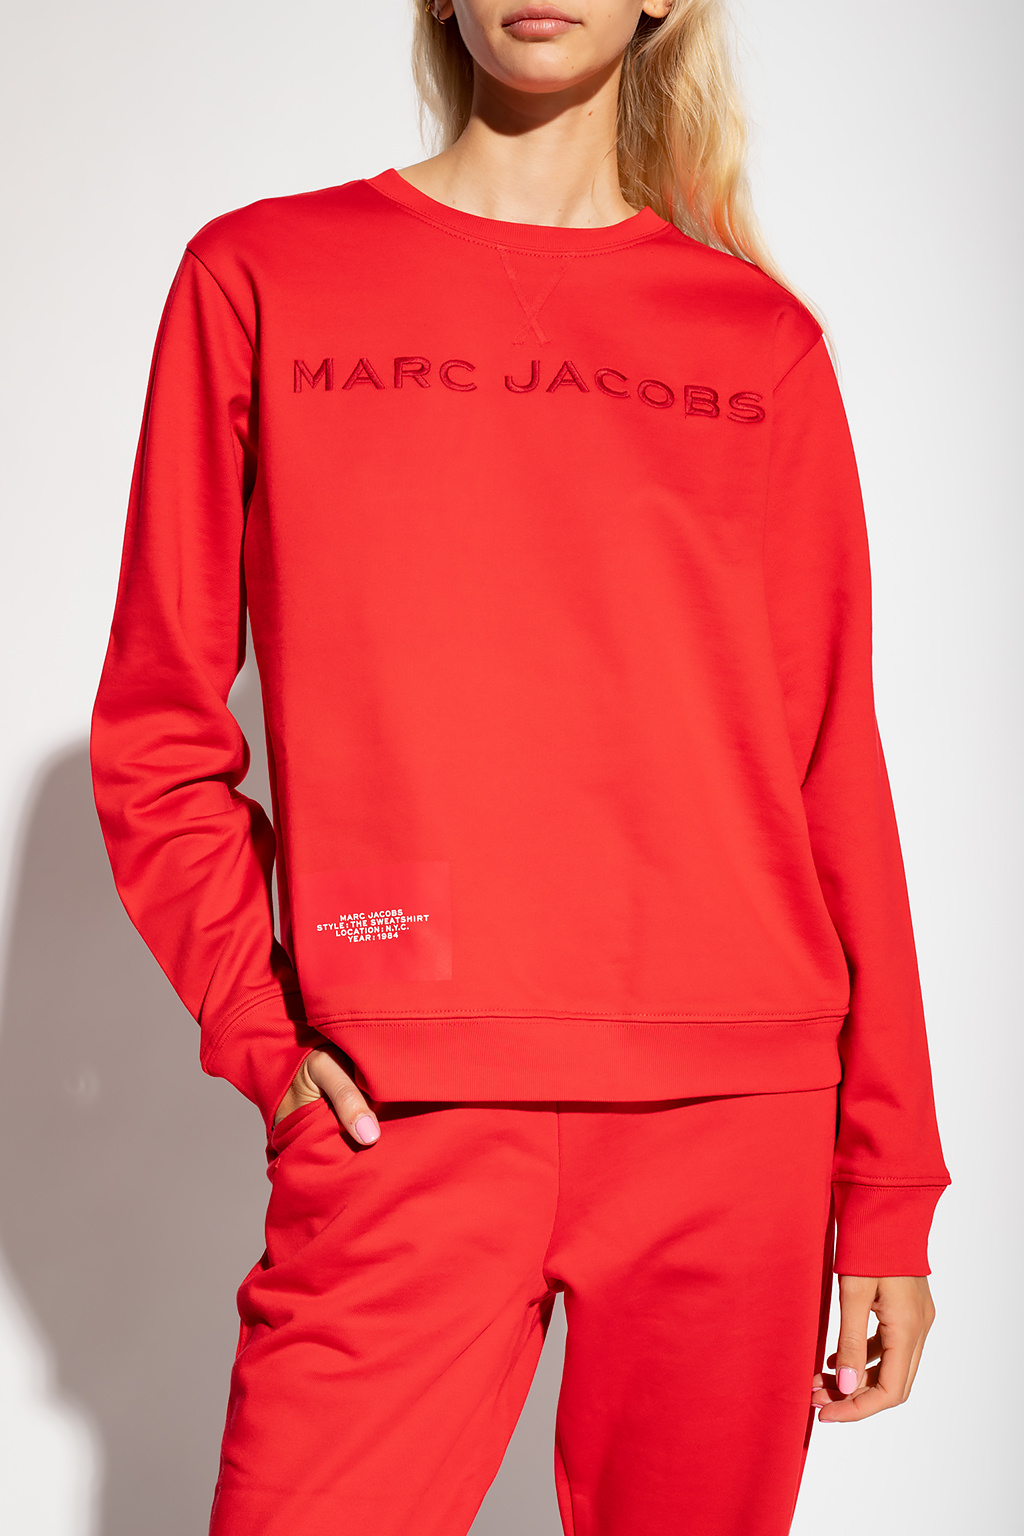 Marc Jacobs marc jacobs x peanuts the tennis shoe item